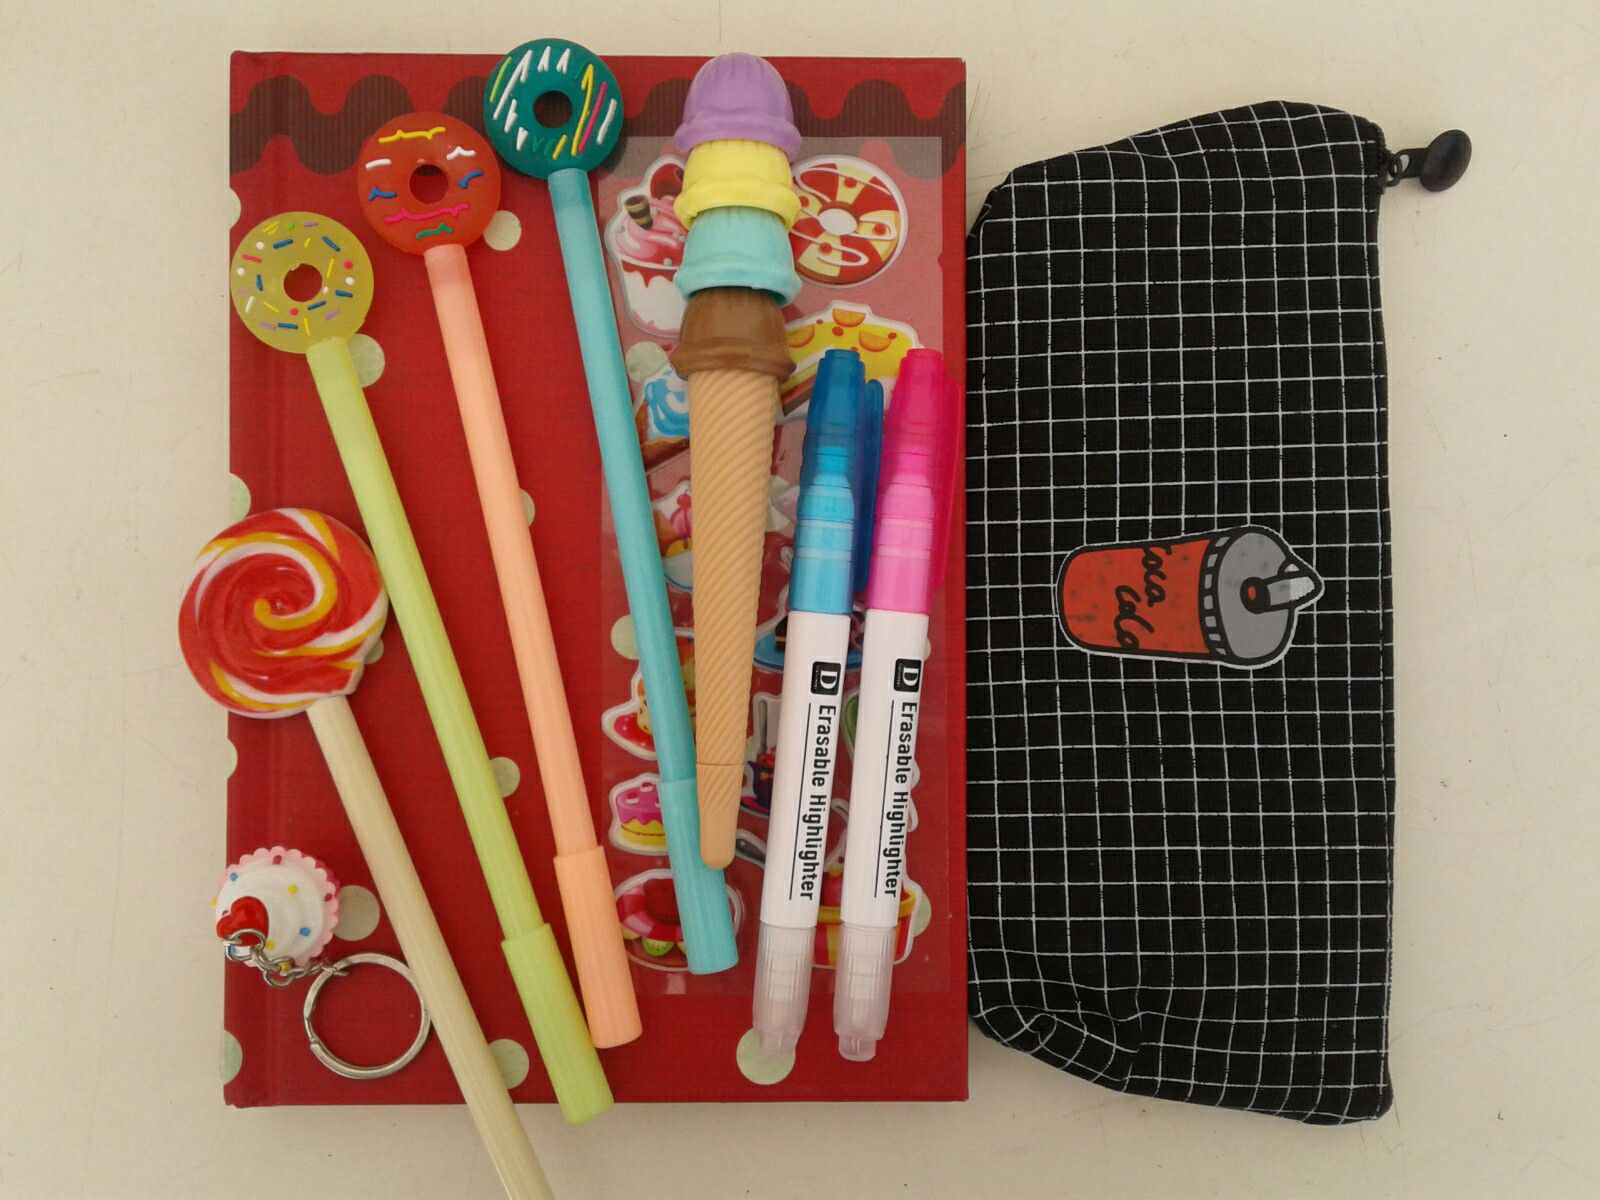 Kawaii Polk-a-dot Sweets Theme Stationery Set (includes notebook, pens, pencil case, etc)